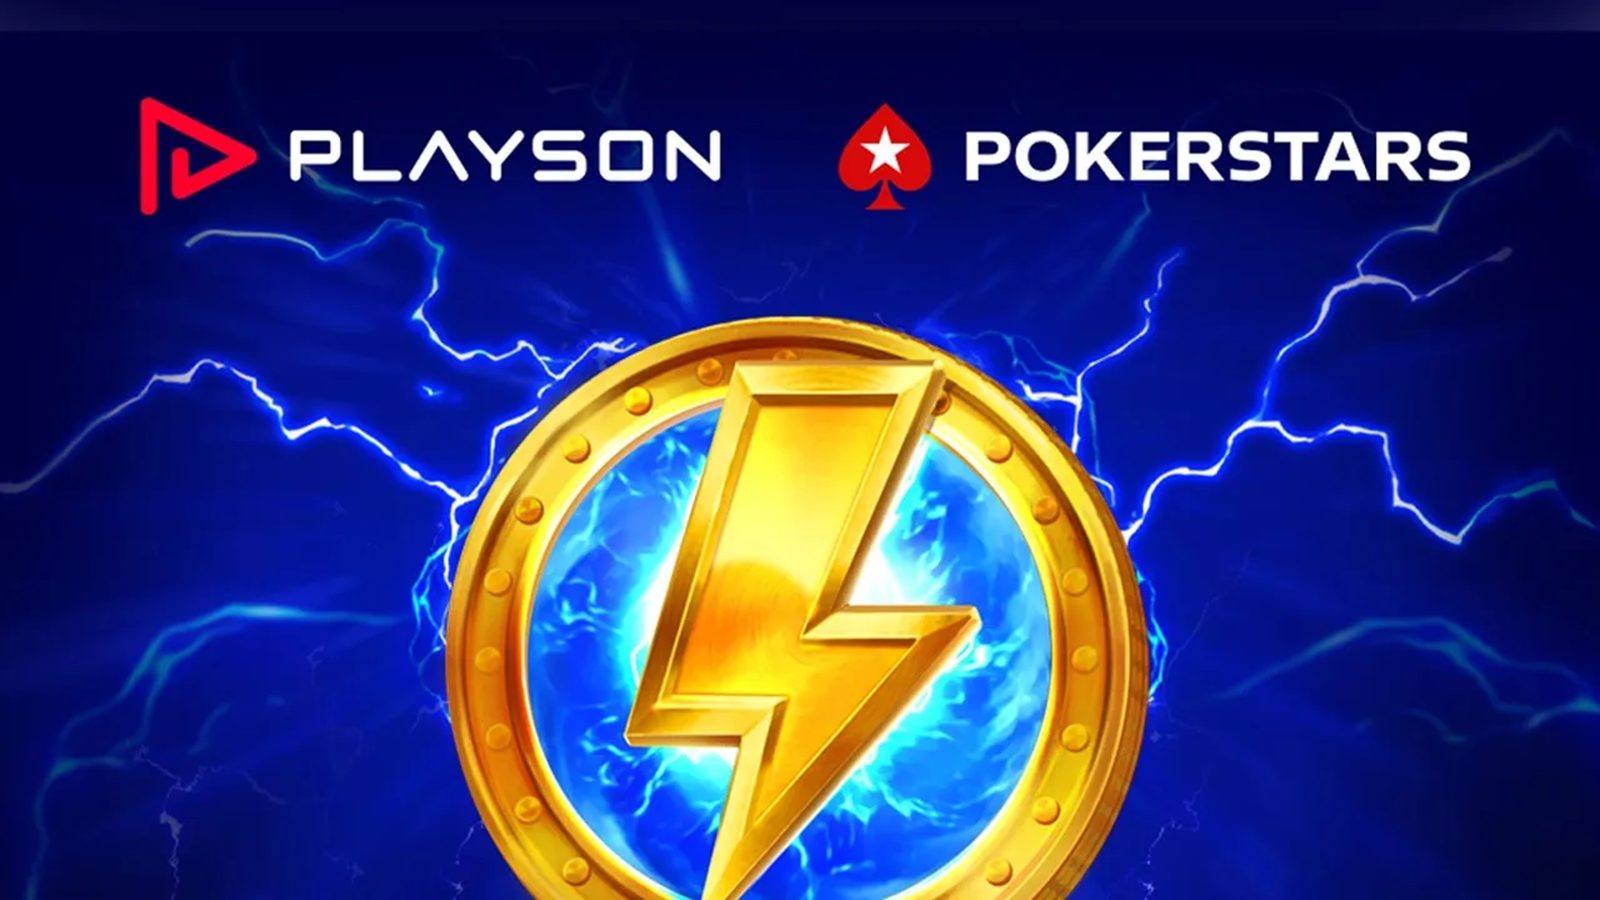 Playson and PokerStars Partnership